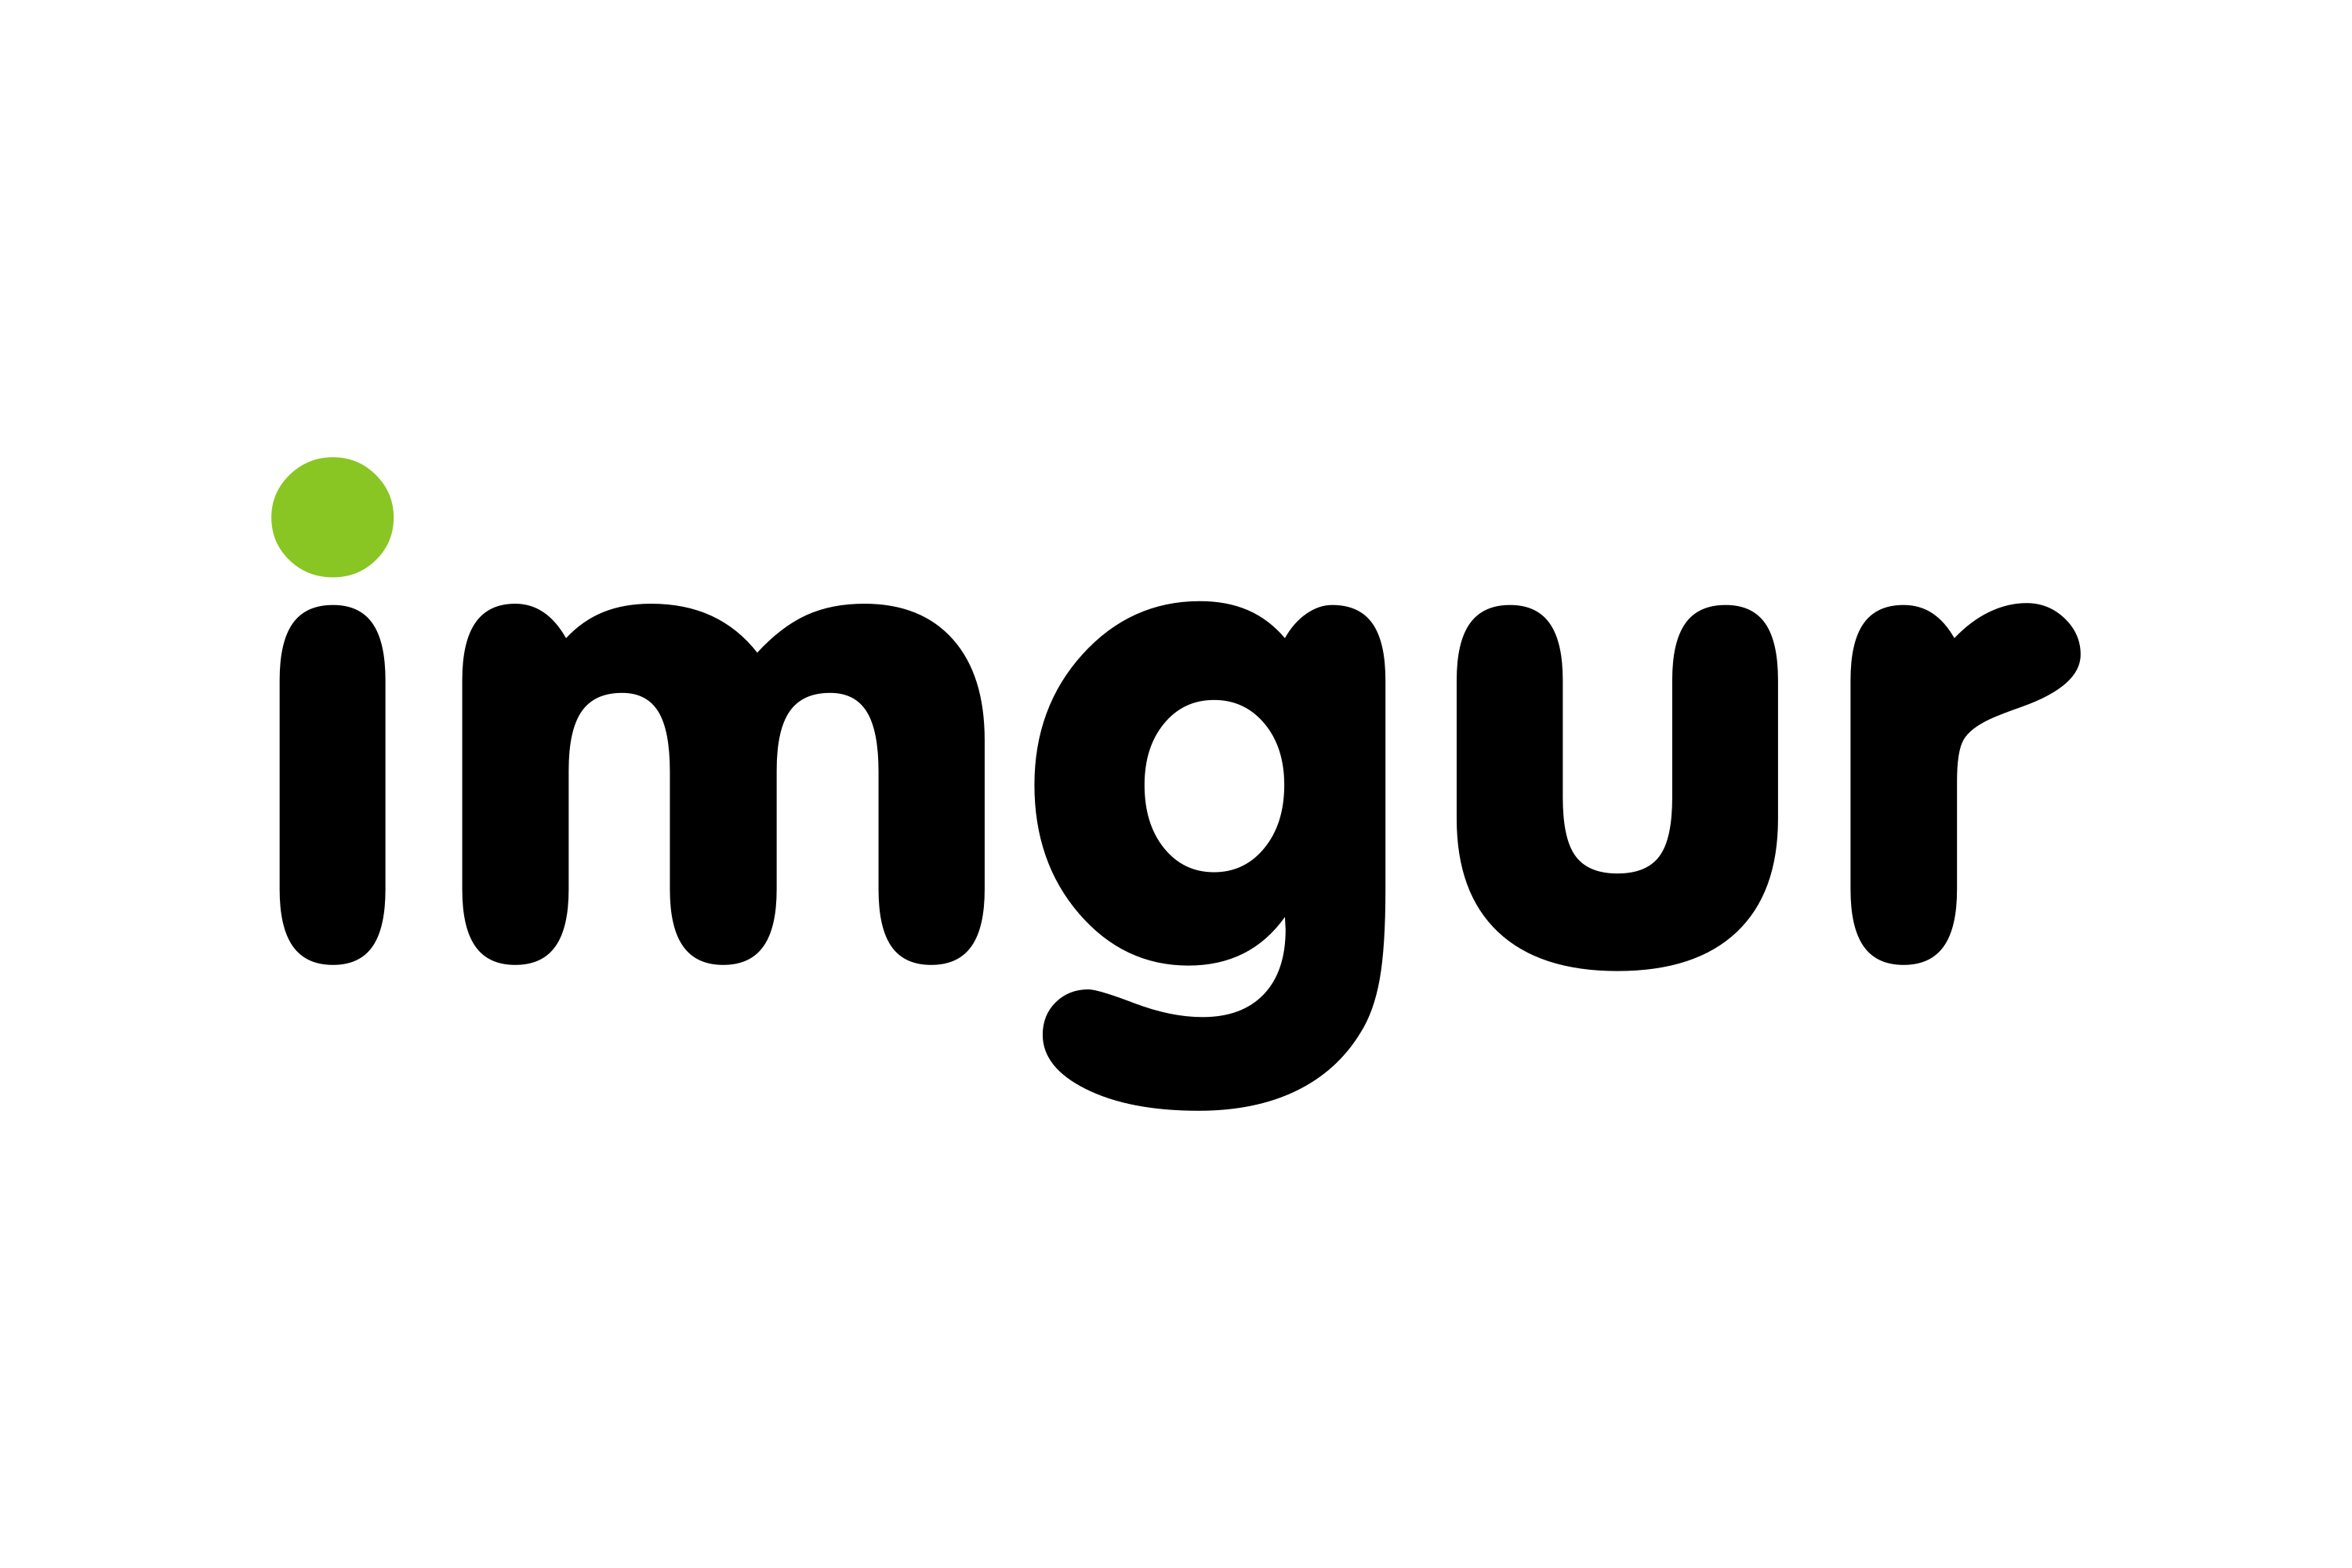 Download Imgur Logo symbol in PNG format. 